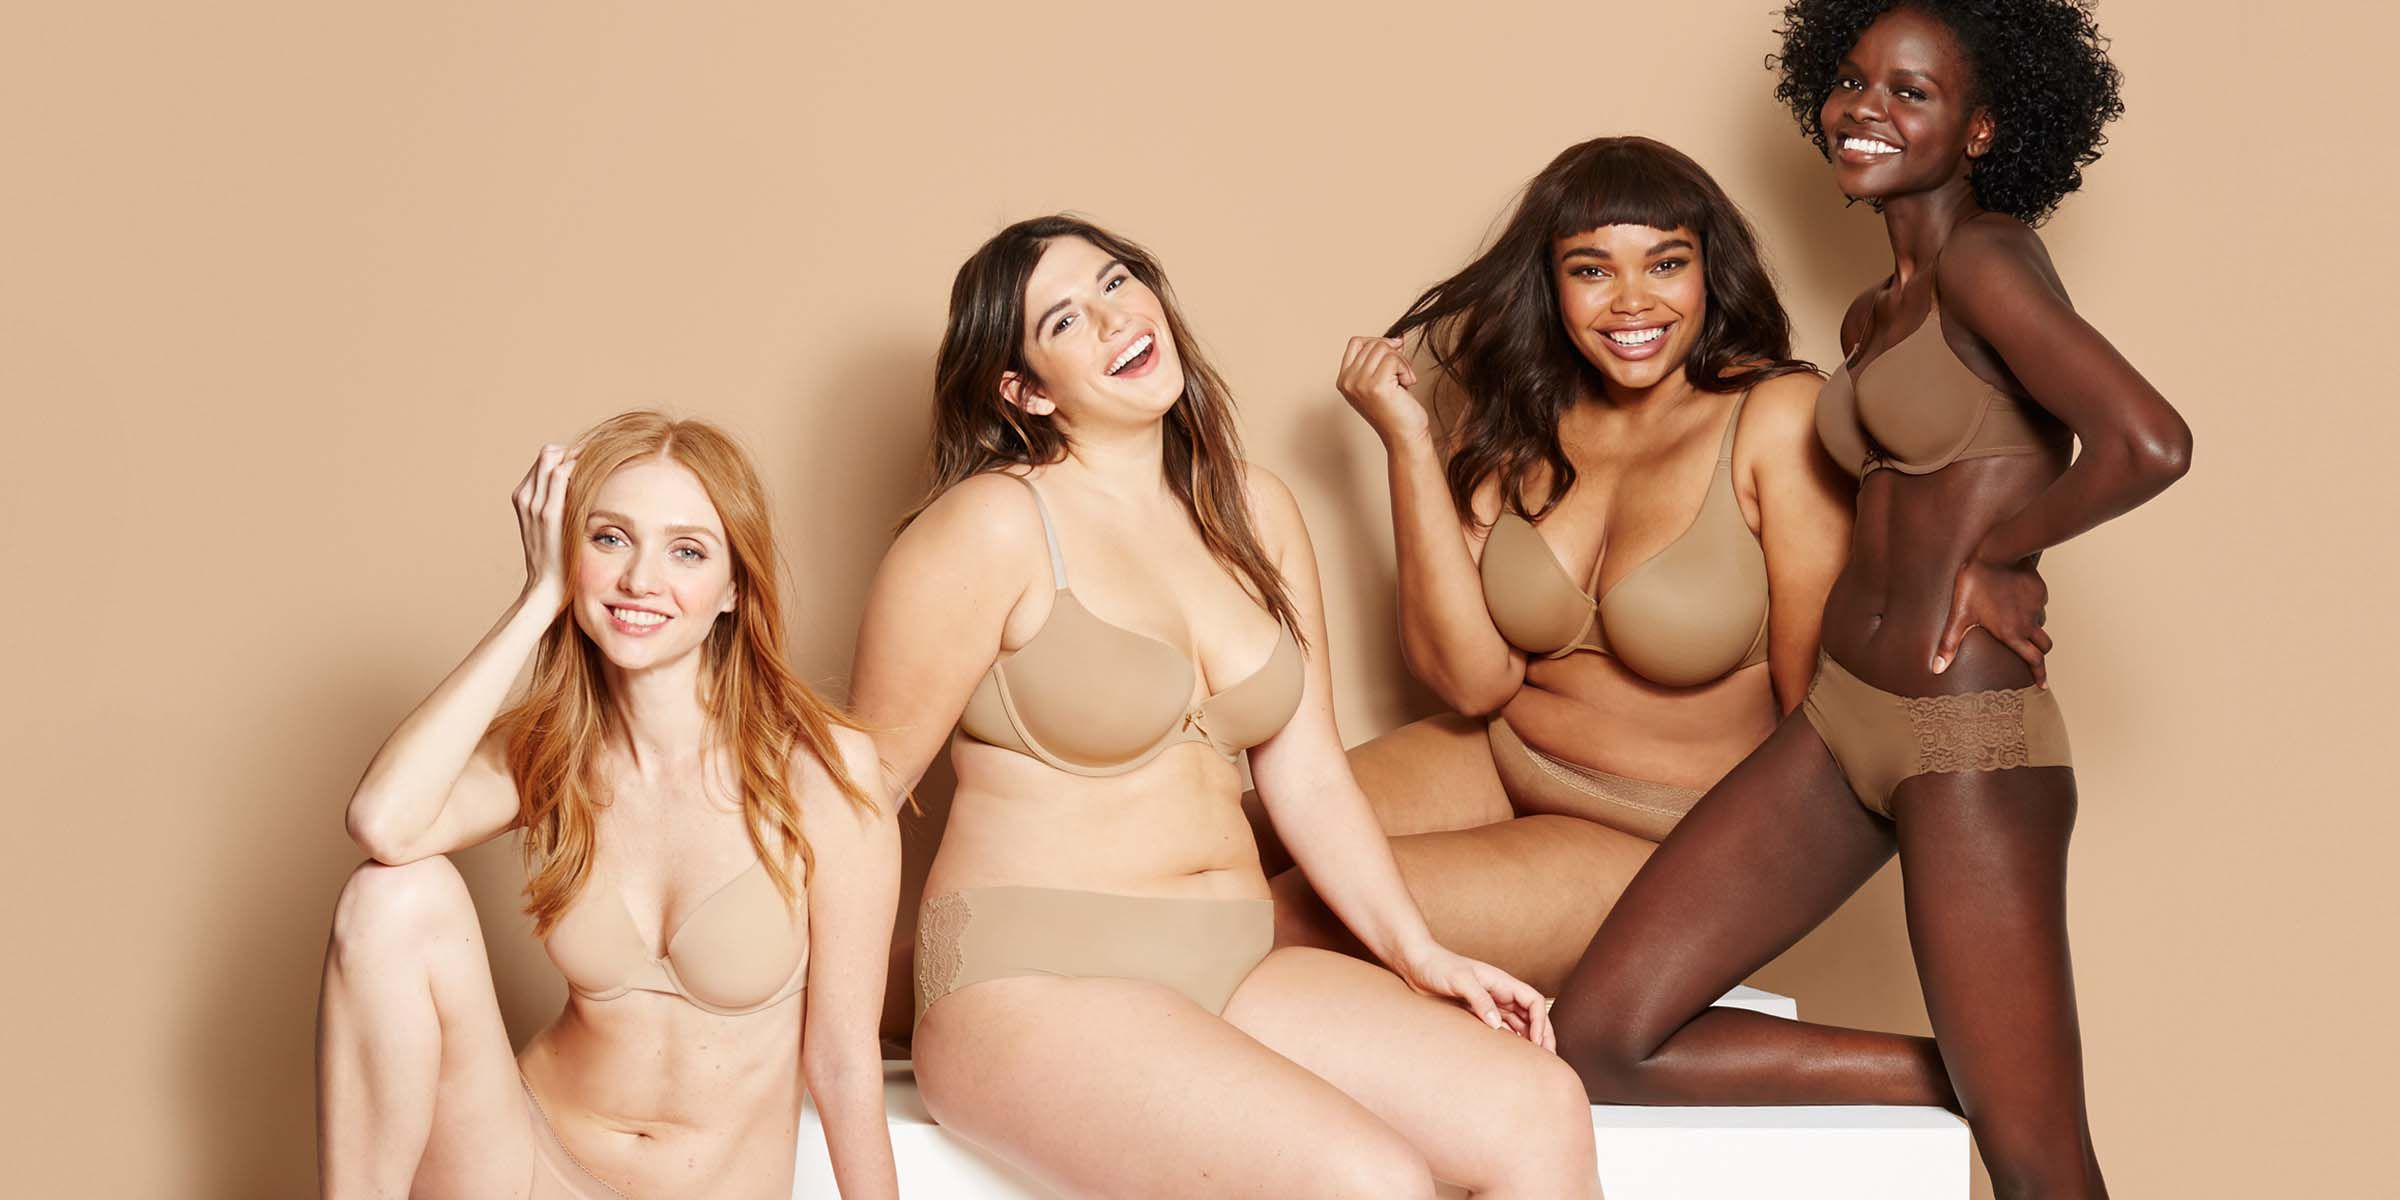 Karen Gillan Bare Tits - Target Is Expanding Its Line of Nude Lingerie